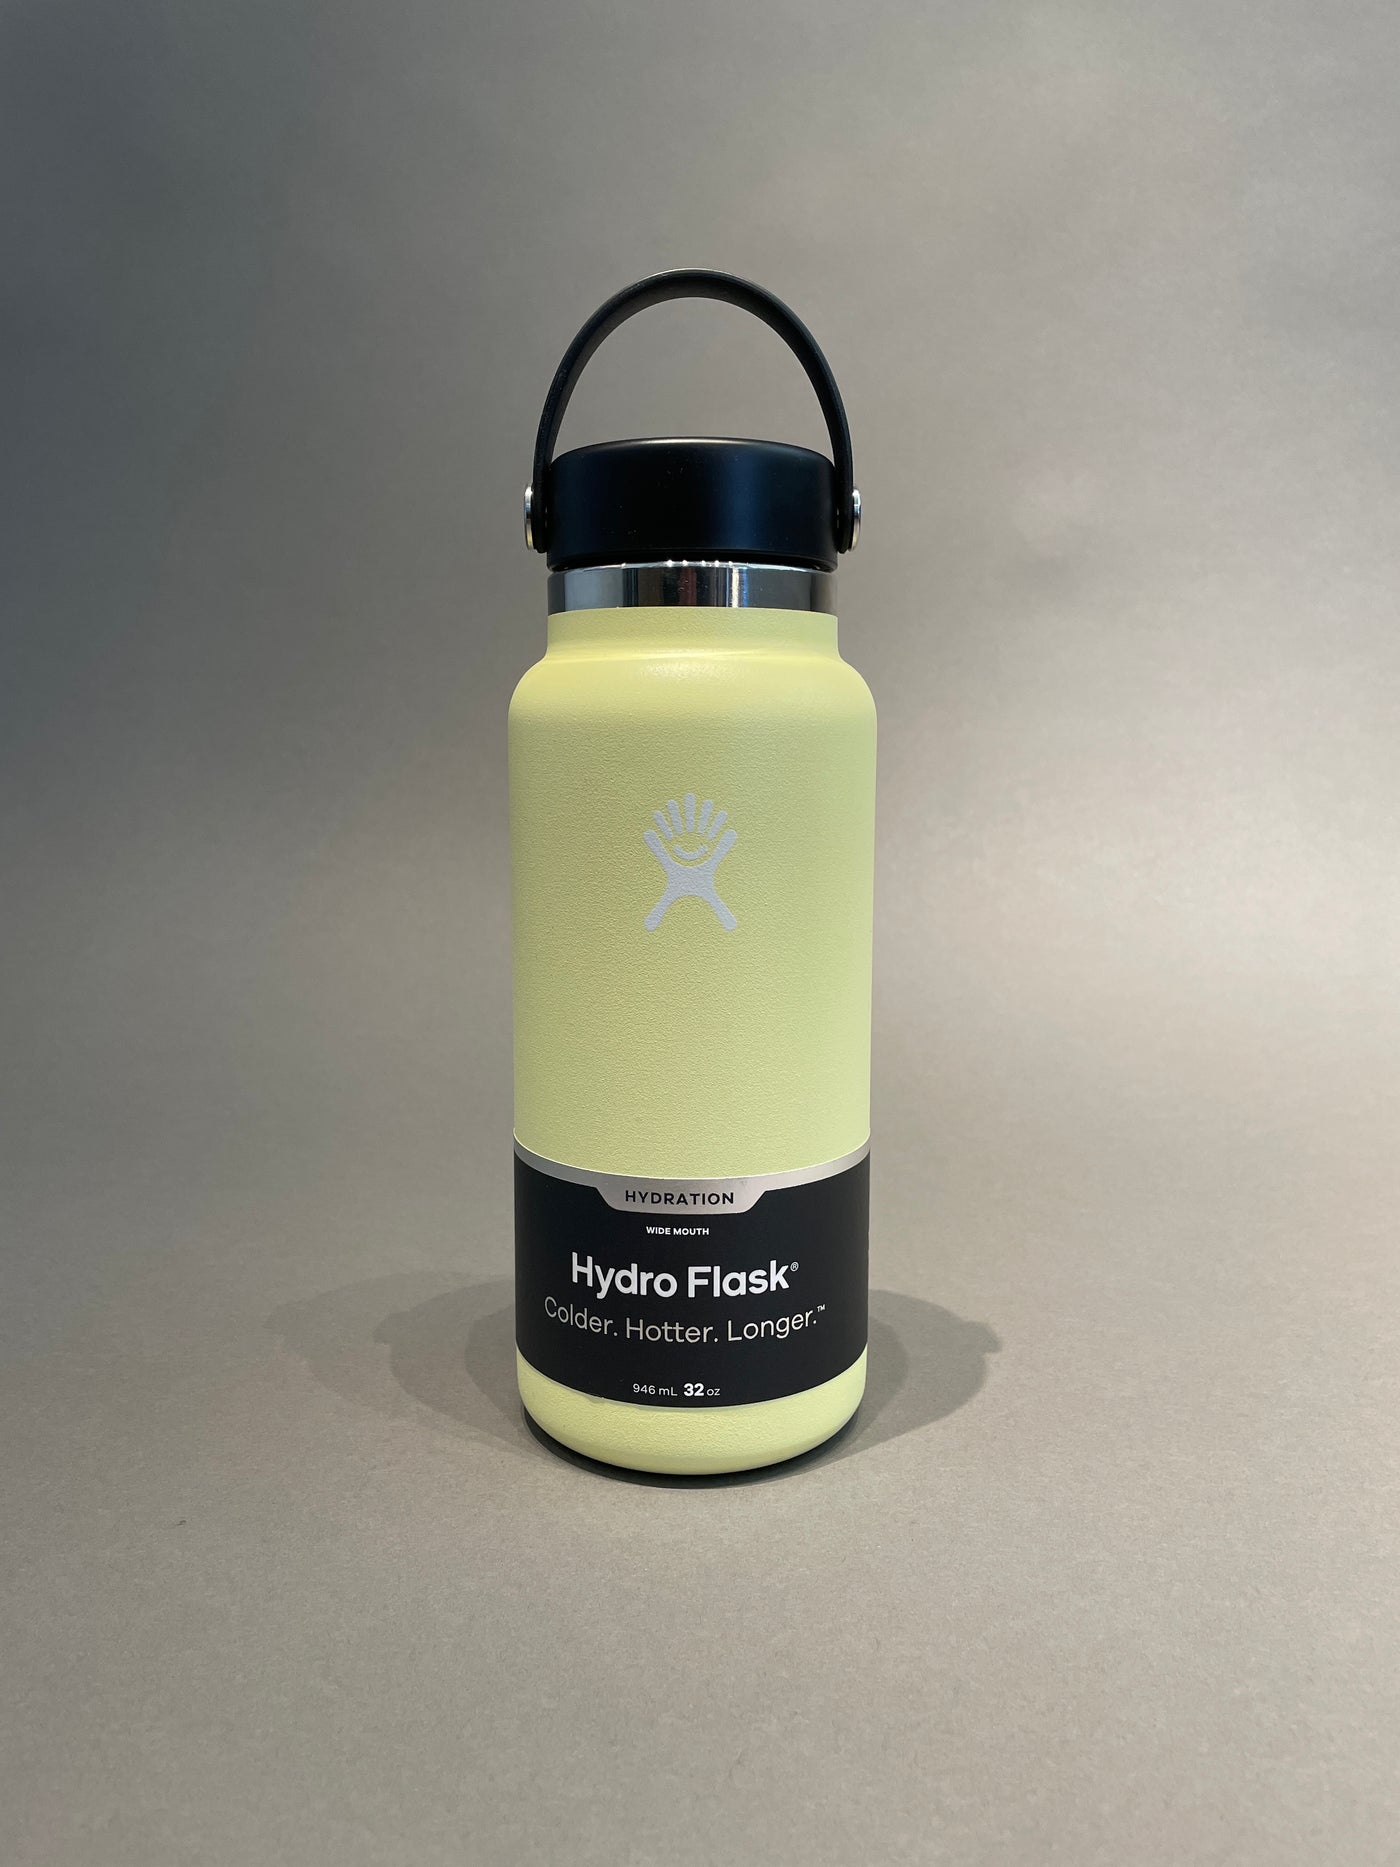 Hydro Flask 24 oz Coffee Mug- Eggplant